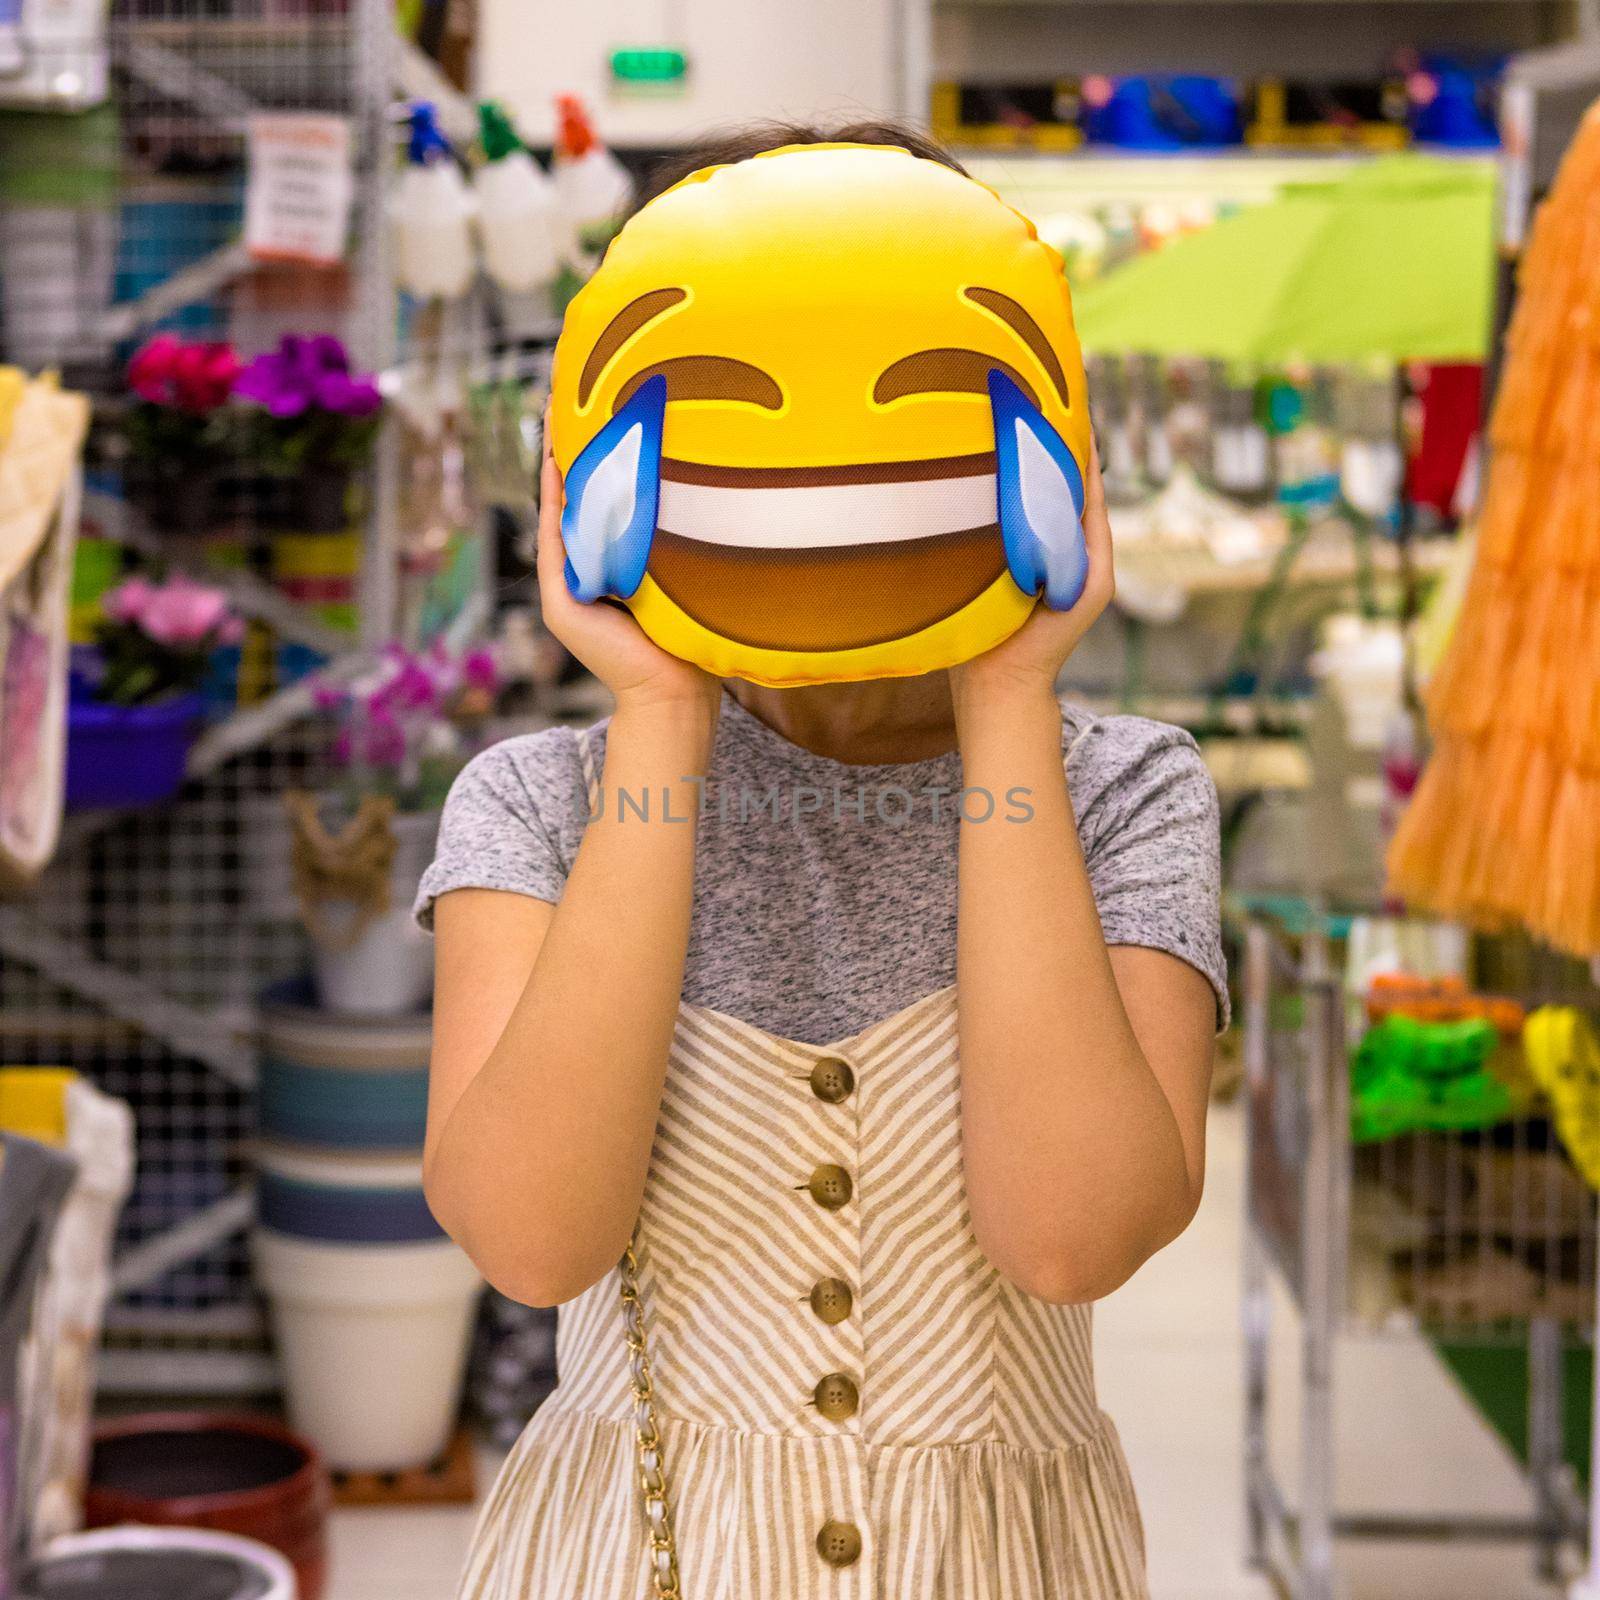 Woman holding a laugh emoji pillow